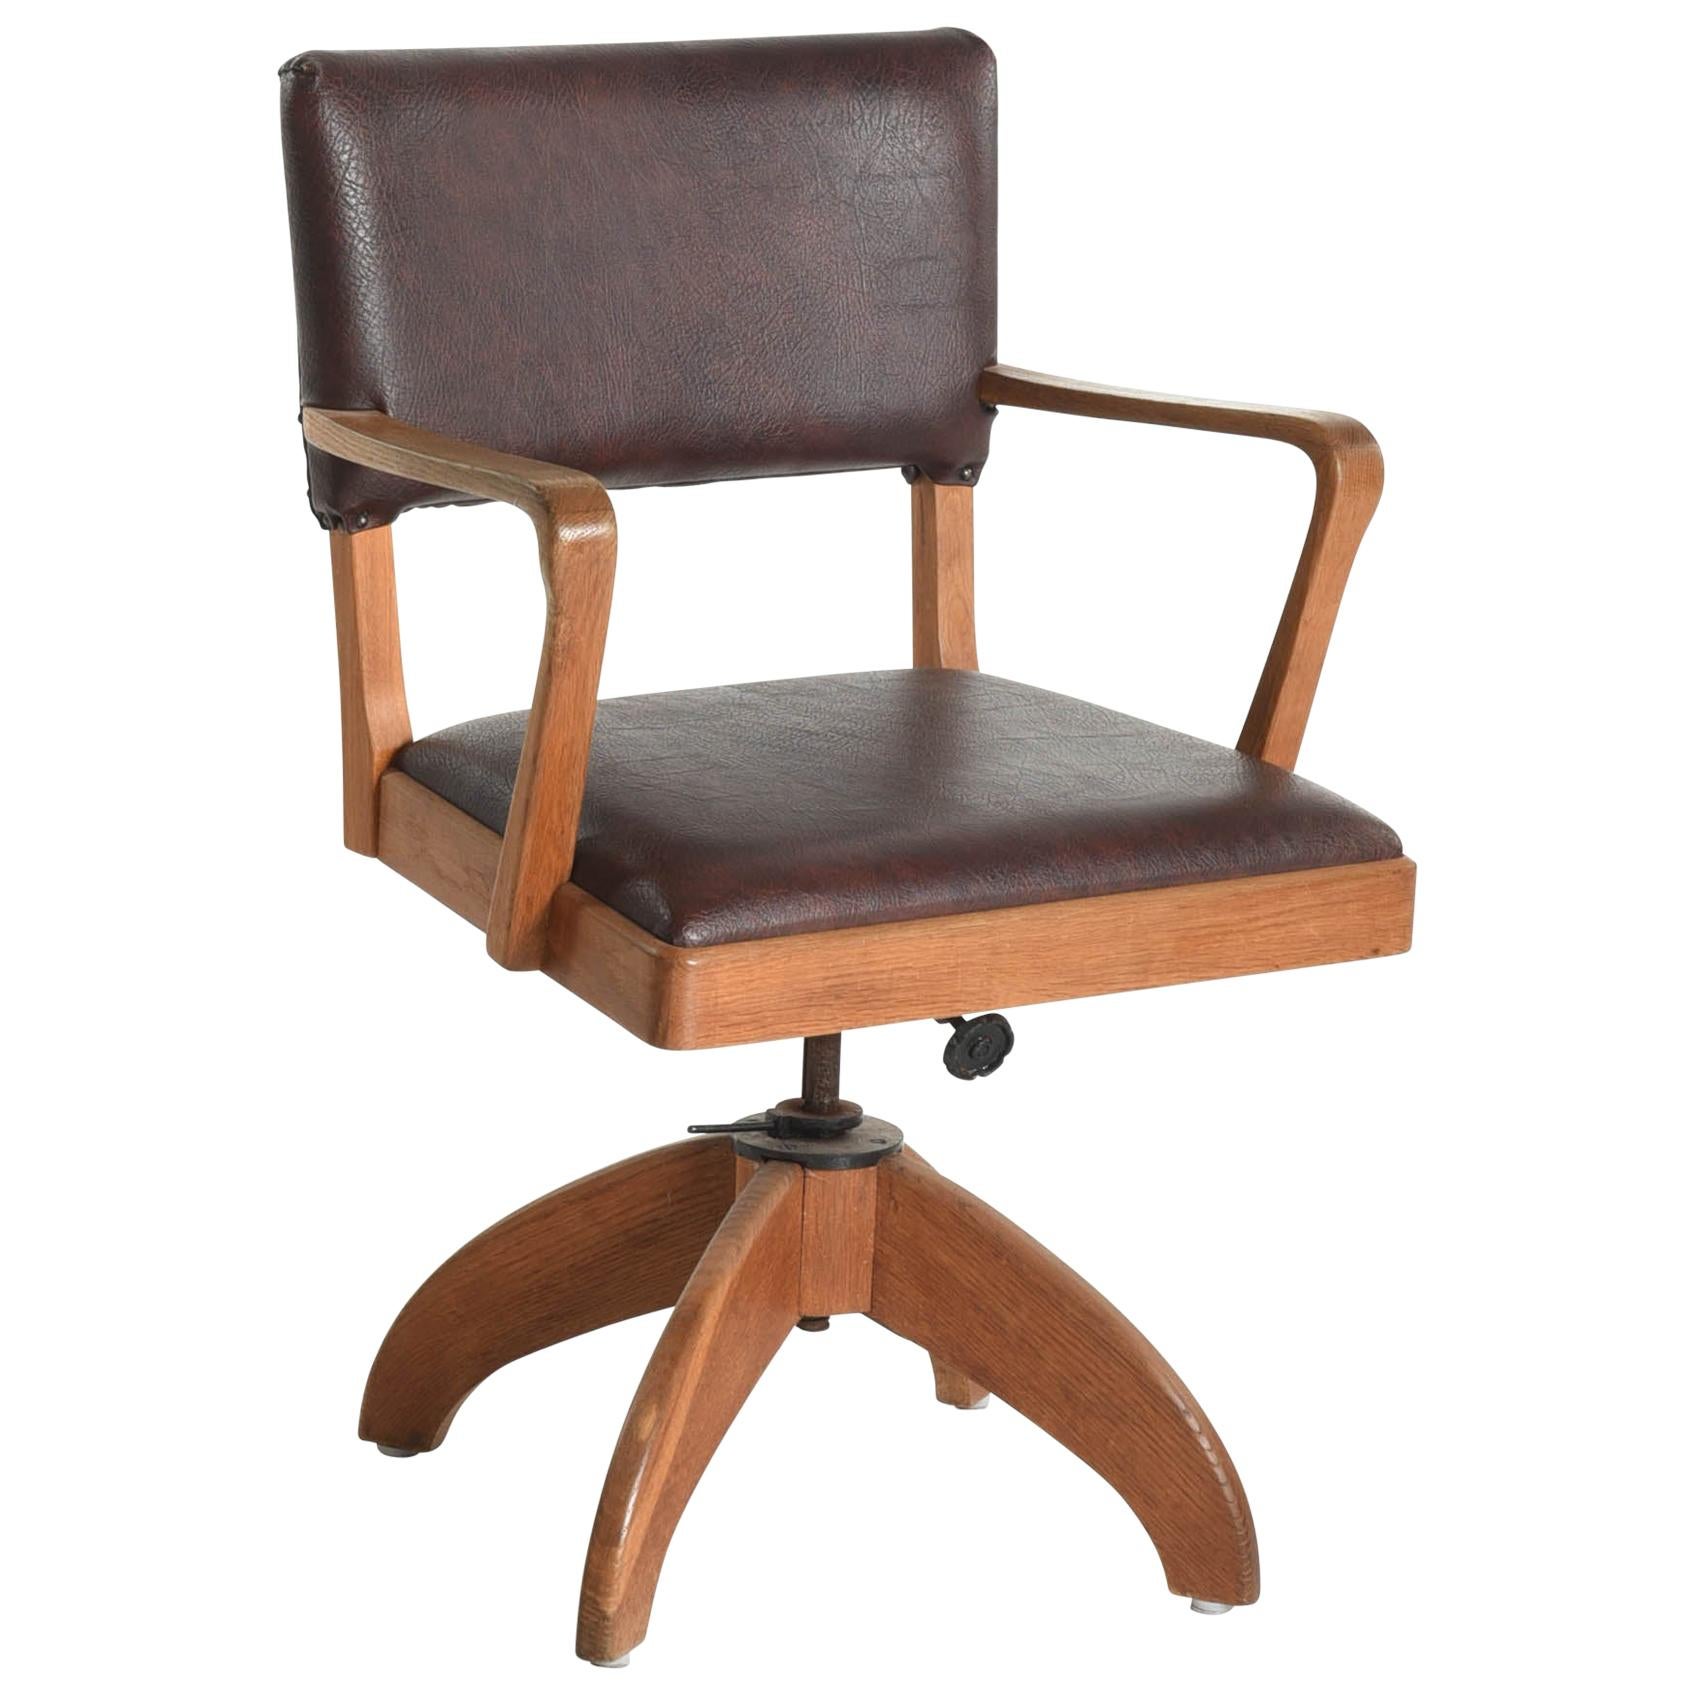 Swedish Art Deco Swivel Chair by Gunnar Ericsson for Facit Atvidaberg